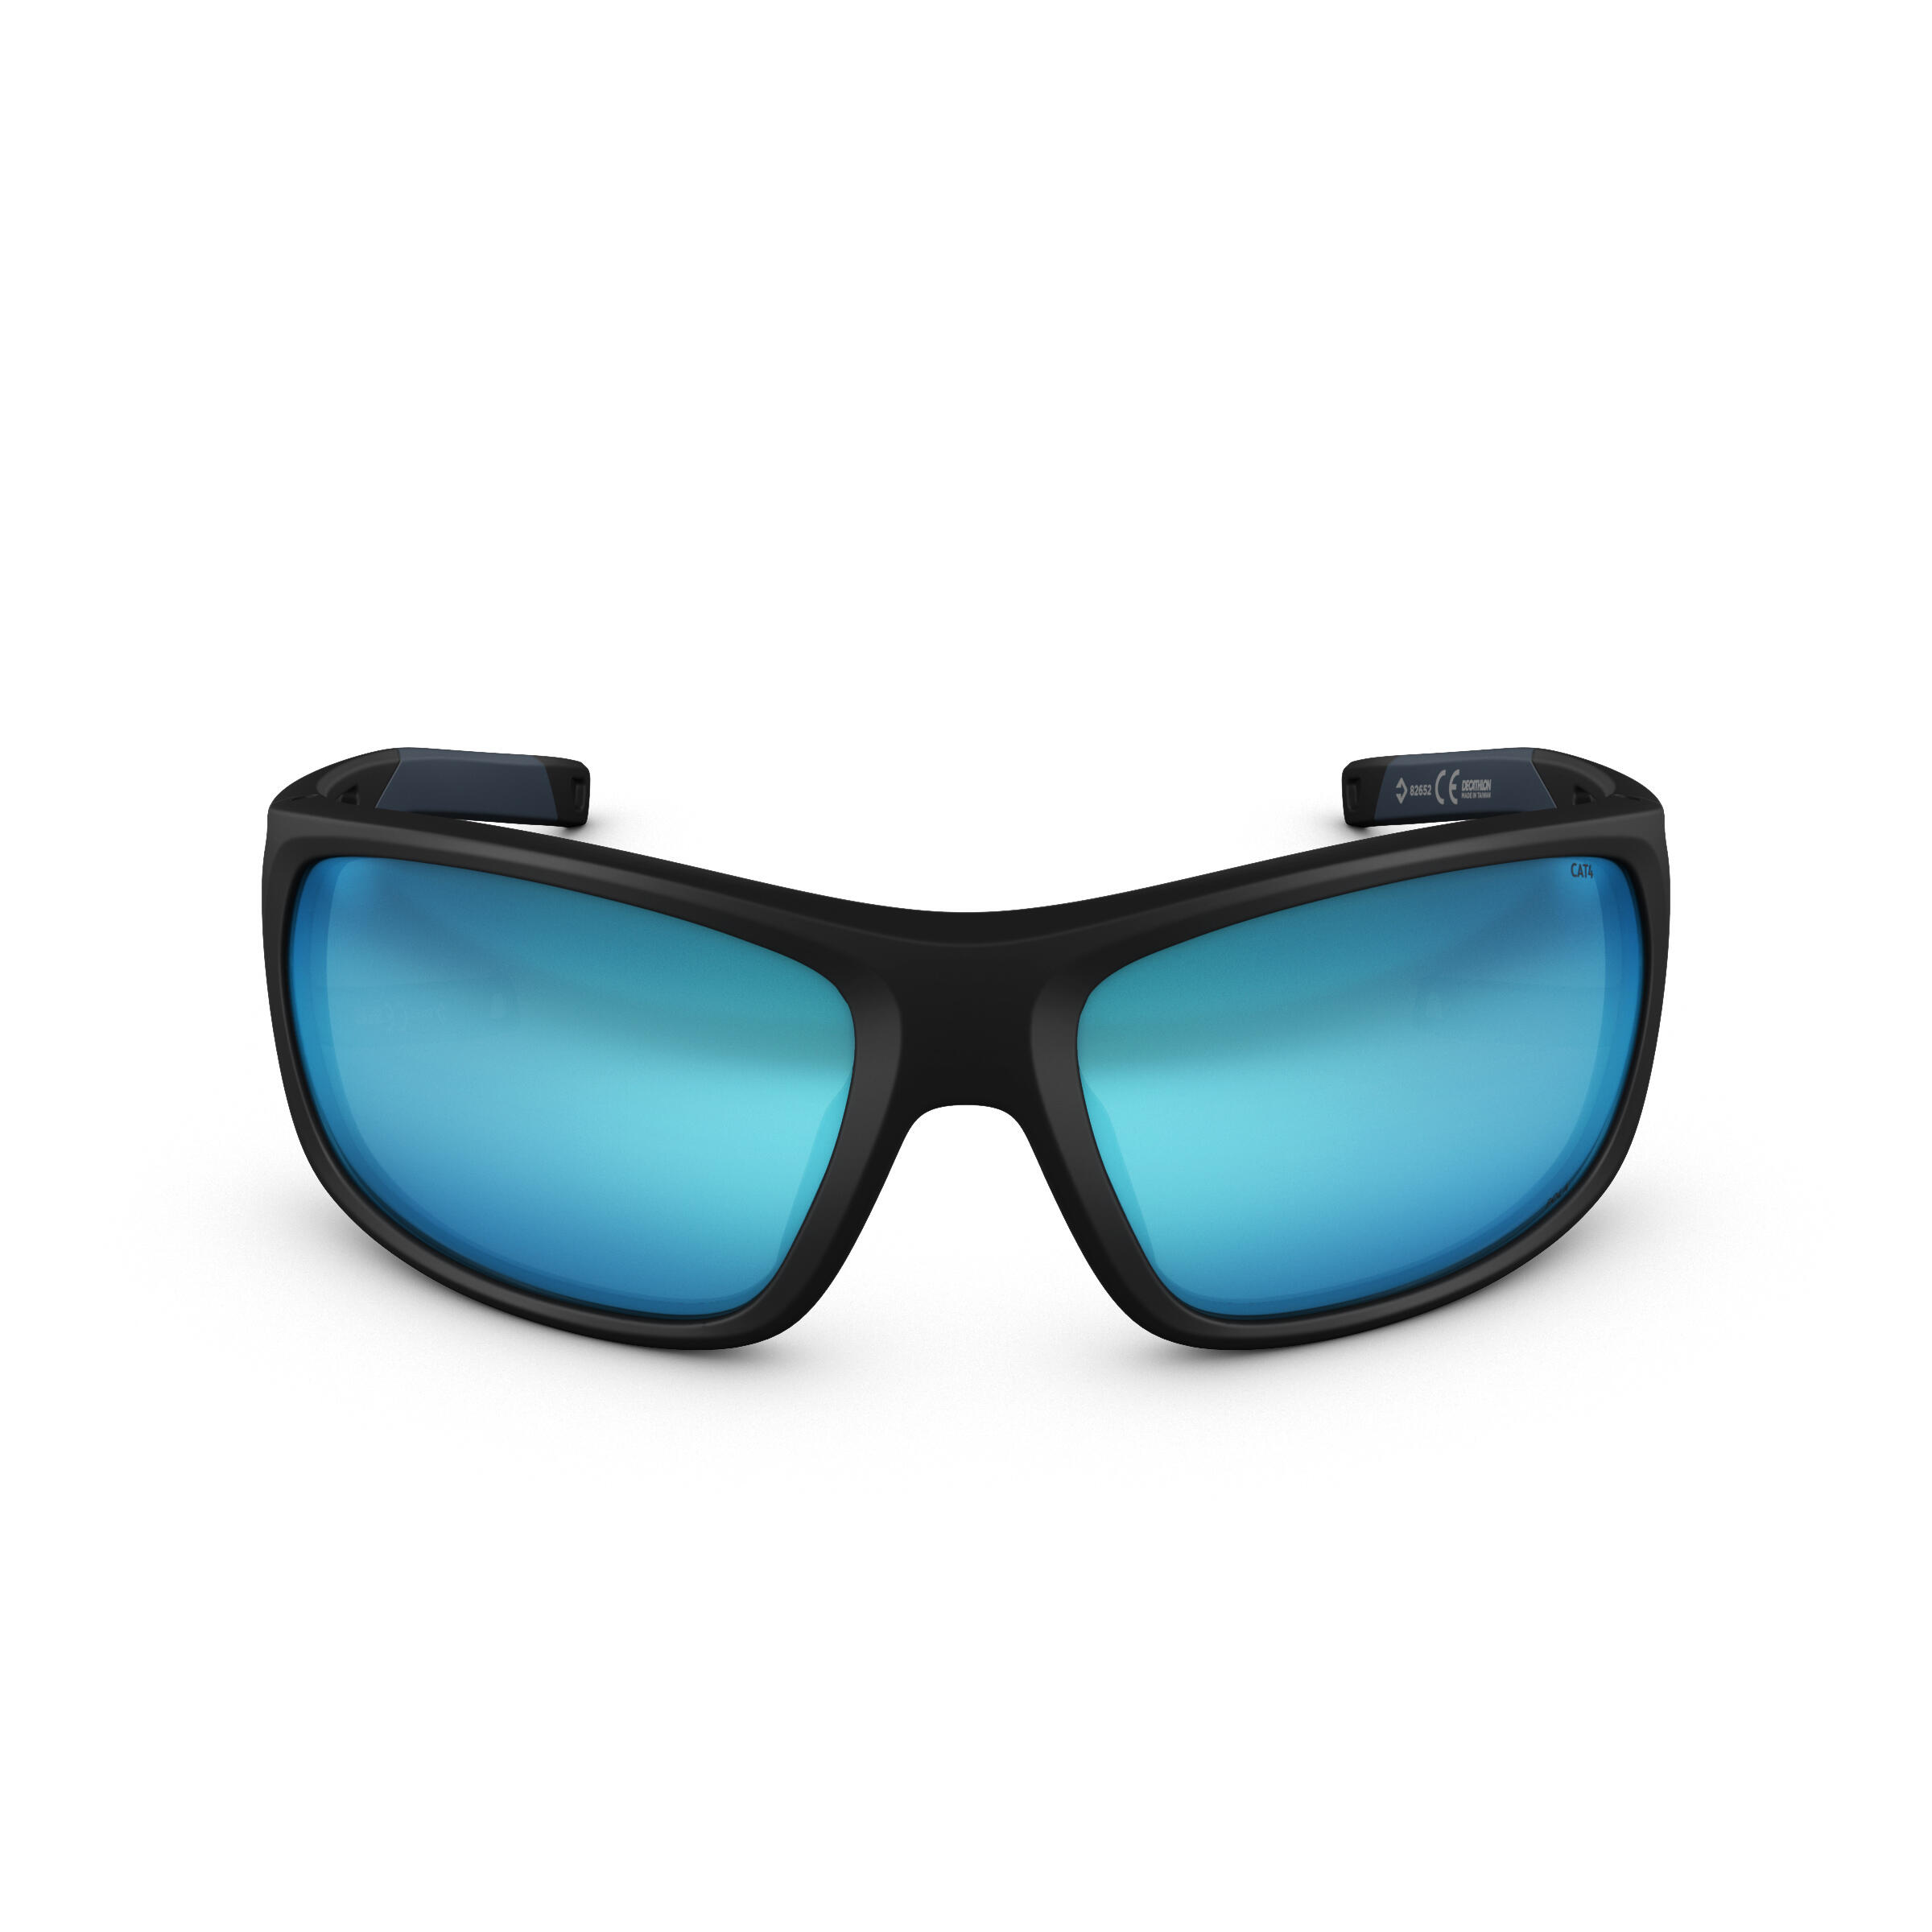 MH580 hiking sunglasses - Adults - black, Navy blue - Quechua - Decathlon